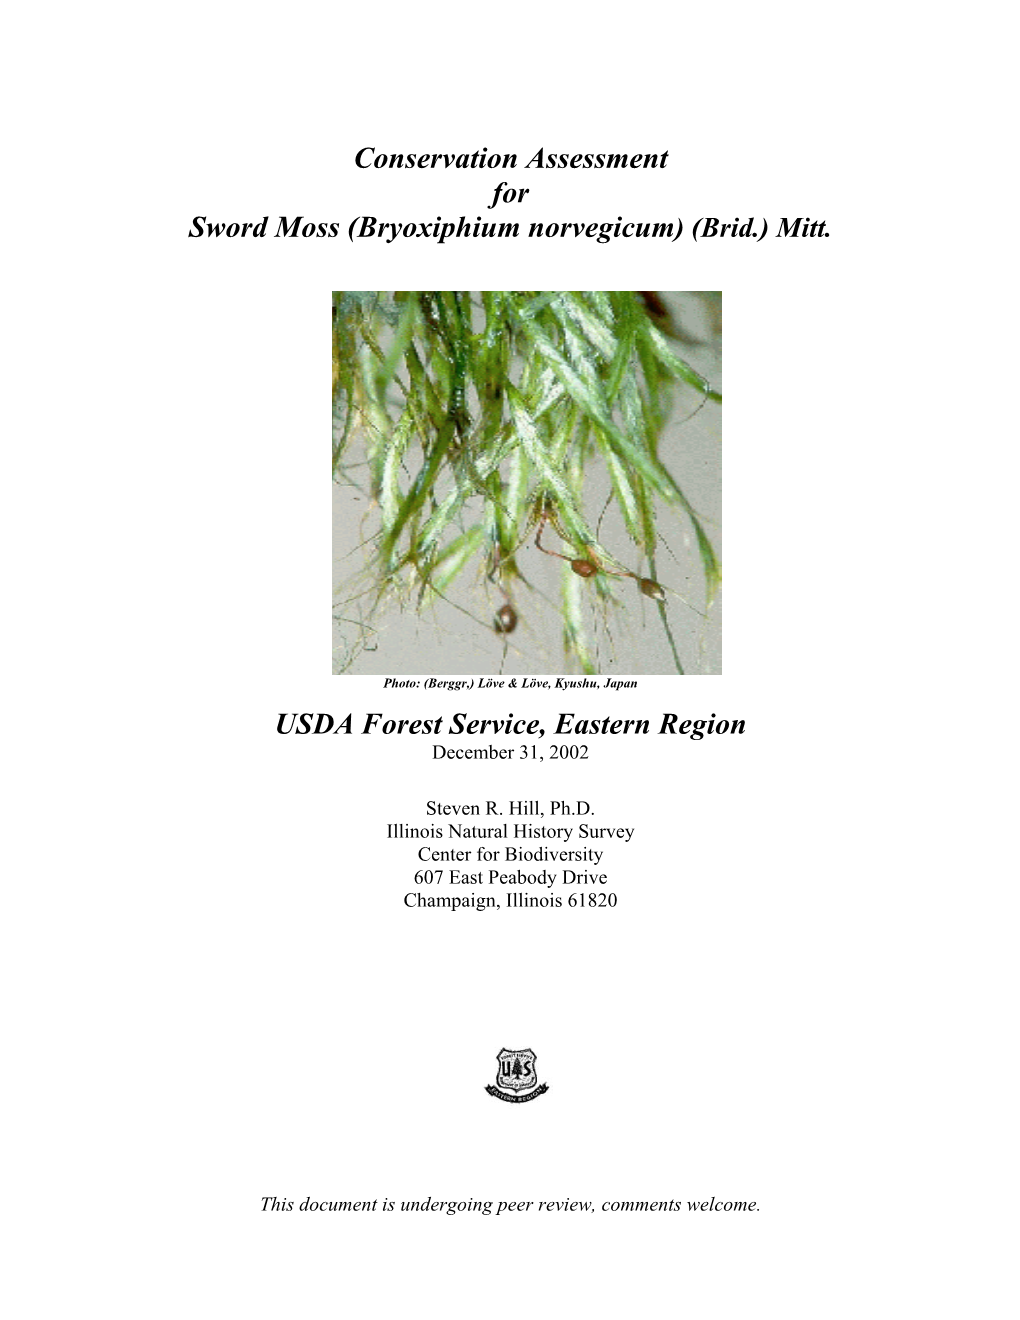 Conservation Assessment for Sword Moss (Bryoxiphium Norvegicum) (Brid.) Mitt